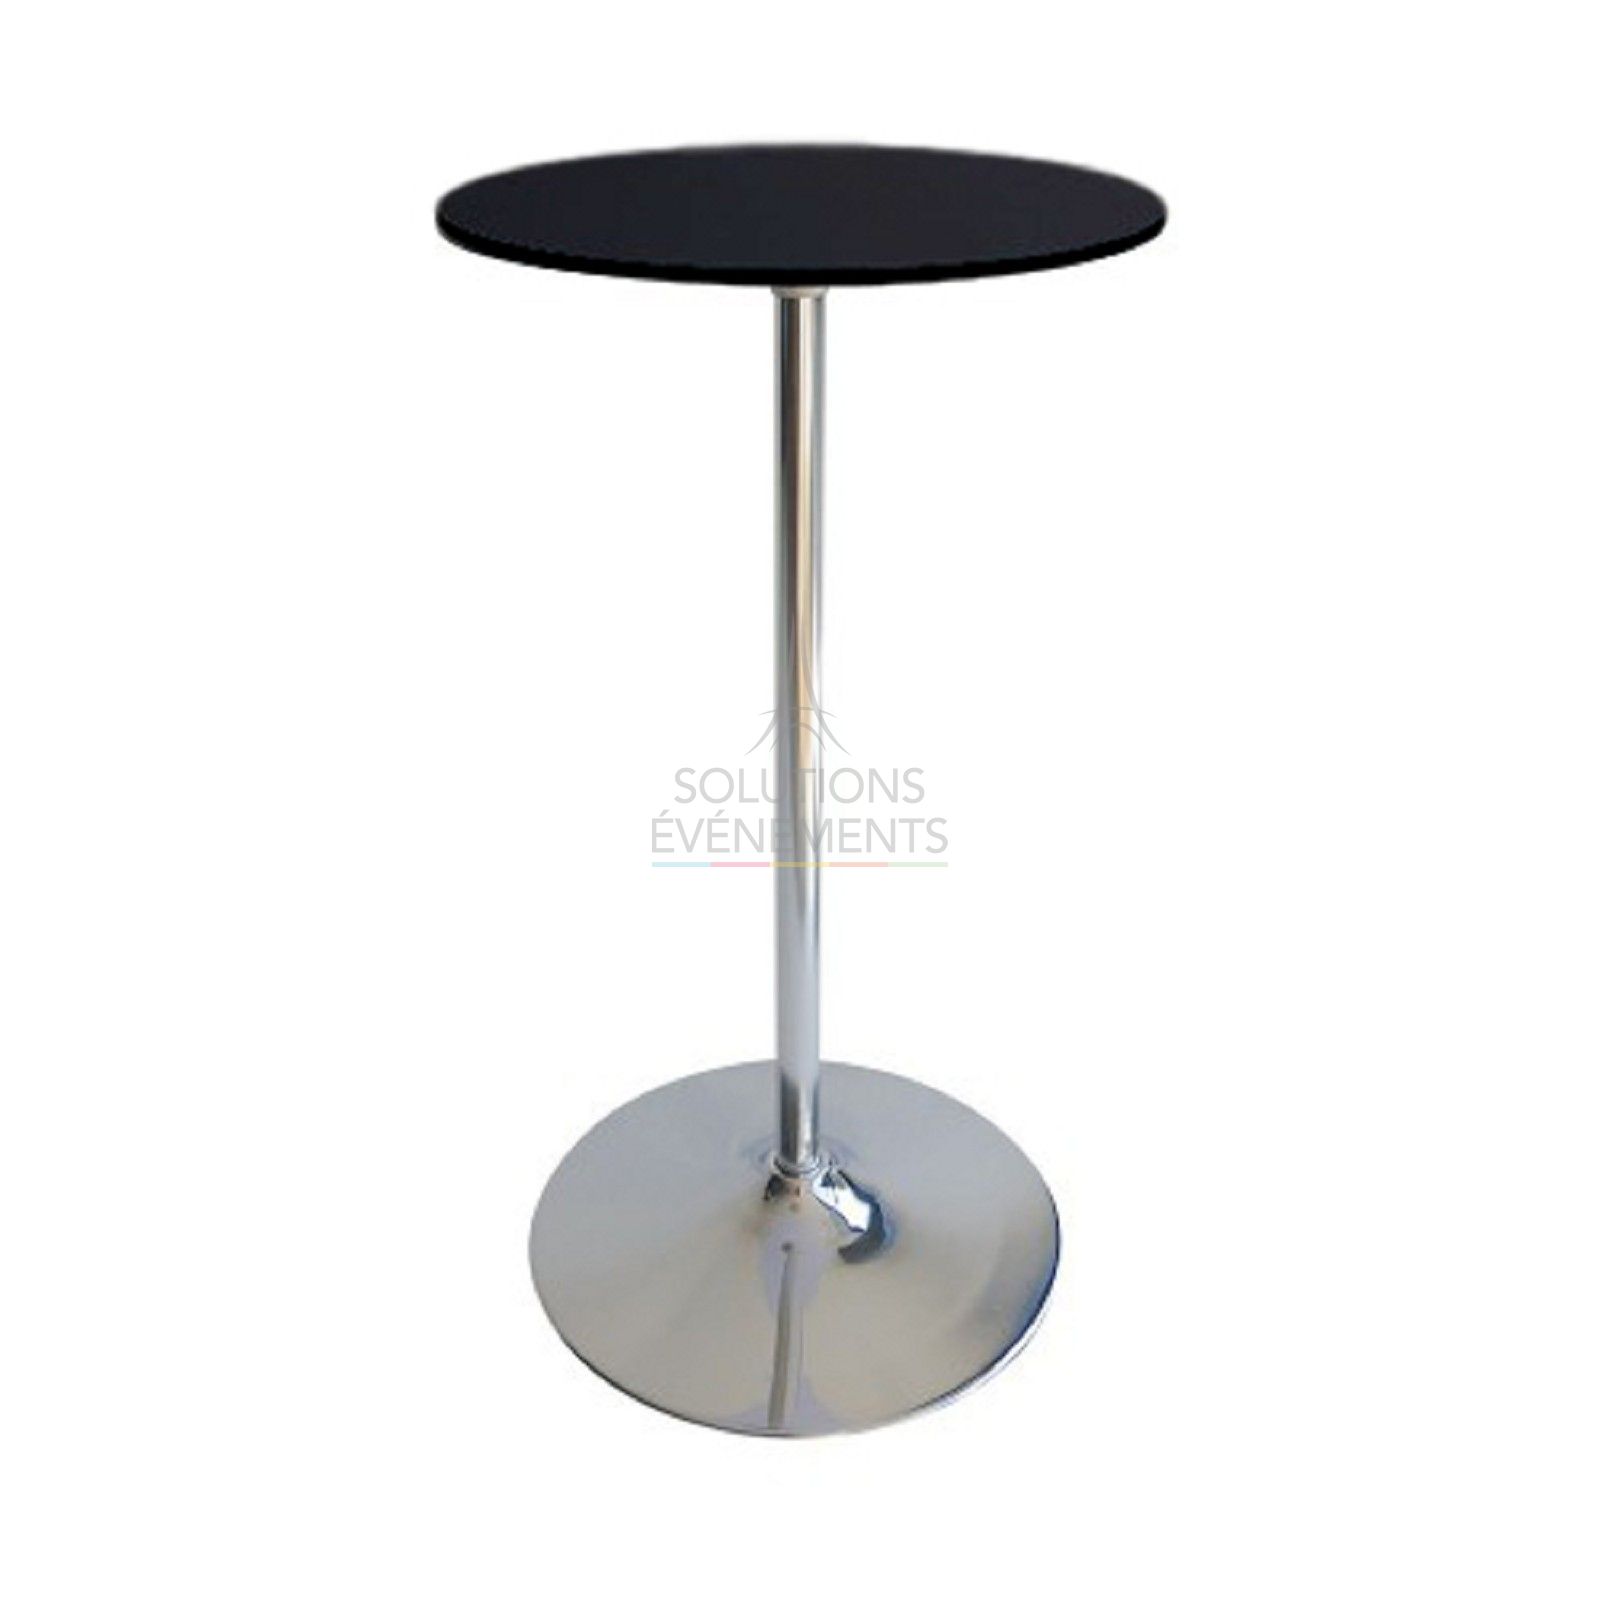 Rental of high dining table diameter 60cm